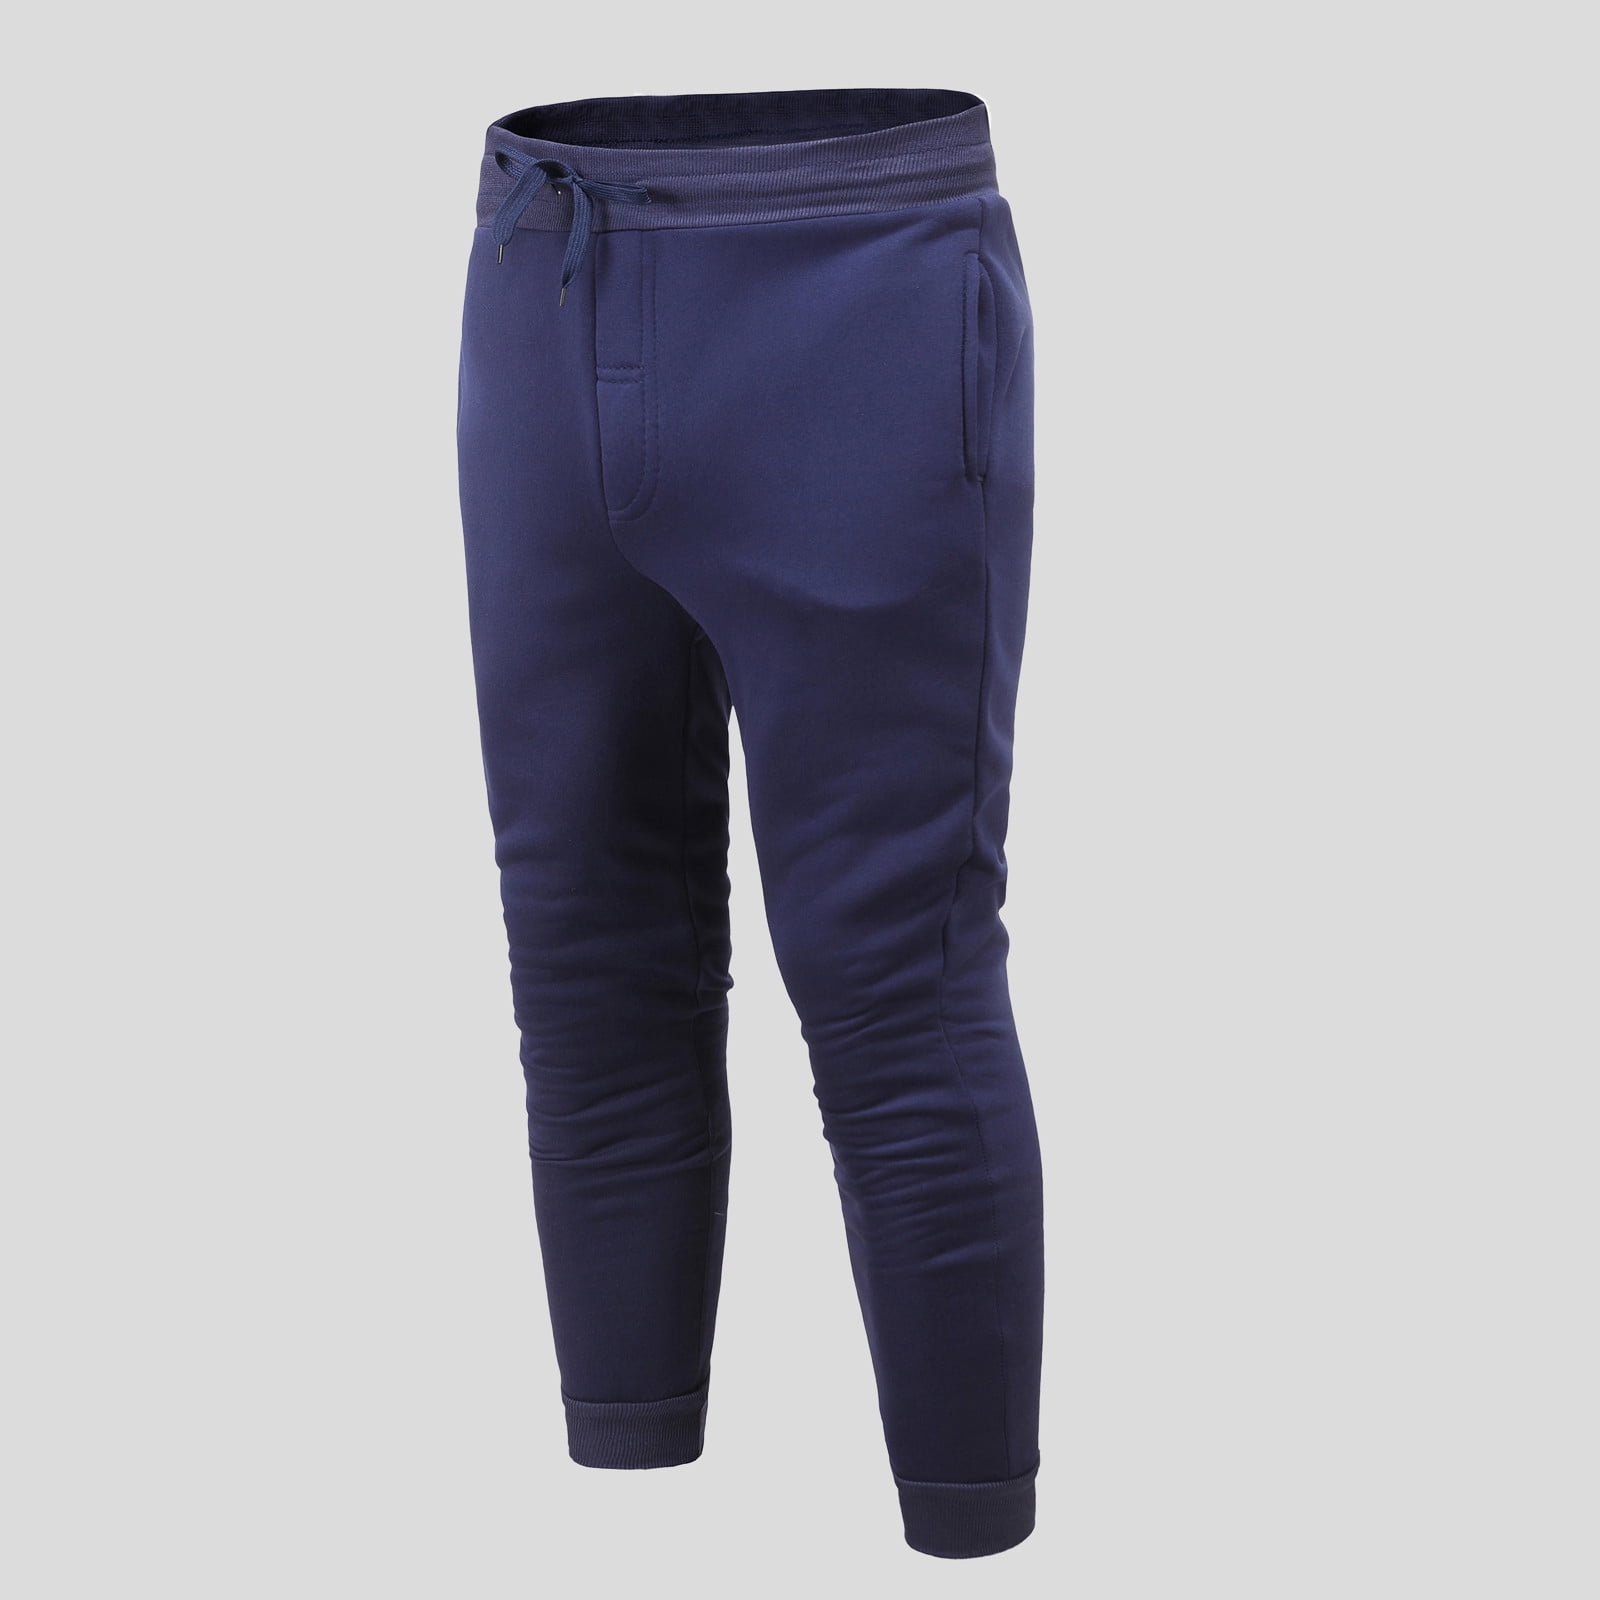 CAICJ98 Sweatpants For Men Men's Drawstring Linen Pants Casual Summer Beach  Loose Trousers Navy,XXL 